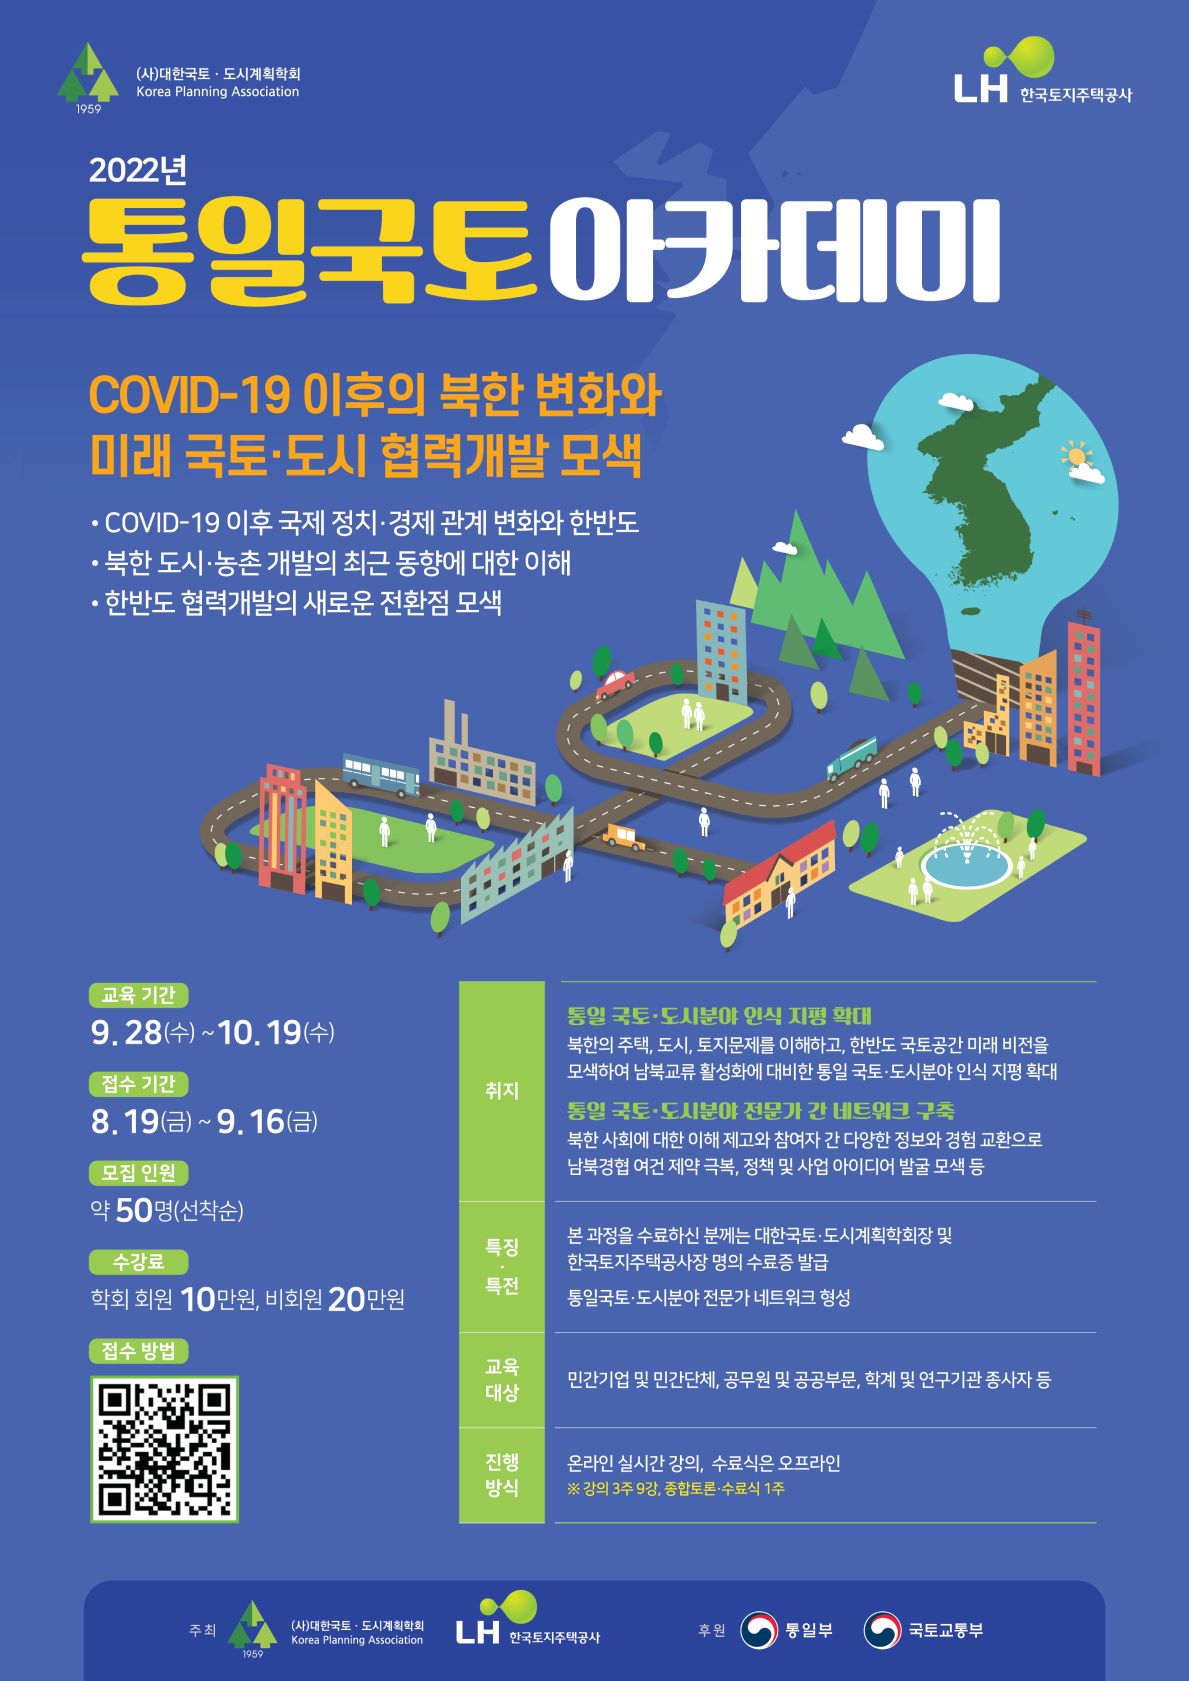 (사)대한국토ㆍ도시계획학회 Korea Planning Association 
2022년 통일국토아카데미
COVID-19 이후의 북한 변화와 미래 국토ㆍ도시 협력개발 모색
COVID-19 이후 국제 정치ㆍ결제 관계 변화와 한반도
북한 도시ㆍ농촌 개발의 최근 동향에 대한 이해
한반도 협력개발의 새로운 전환점 모색
교육 기간:9.28(수)~10.19(수)
접수 기간:8.19(금)~9.16(금)
모집 인원:약50명(선착순)
수강료:학회 회원 10만원, 비회원 20만원
접수방법:QR코드 바로가기
취지:통일 국토ㆍ도시분야 인식 지평 확대-북한의 주택, 도시, 토지문제를 이해하고, 한반도 국토공간 미래 비전을 모색하여 남북교류 활성화에 대비한 통일 국토ㆍ도시분야 인식 지평 확대
통일 국토ㆍ도시분야 전문가 간 네트워크 구축
- 북한 사회에 대한 이해 제고와 참여자 간 다양한 정보와 경험 교환으로 남북경협 여건 제약 극복,
정책 및 사업 아이디어 발굴 모색 등
특징ㆍ특전 : 본 과정을 수료하신 분께는 대한국토ㆍ도시계획학회장 및 한국토지주택공사장 명의 수료증 발급 
통일국토ㆍ도시분야 전문가 네트워크 형성교육대상 : 민간기업 및 민간단체, 공무원 및 공공부분, 학계 및 연구기관 종사자 등진행방식 : 온라인 실시간 강의, 수료식은 오프라인 ※ 강의 3주 9강, 종합토론ㆍ수료식 1주주최 :(사)대한국토ㆍ도시계획학회 Korea Planning Association , LH 한국토지주택공사후원 : 통일부, 국토교통부